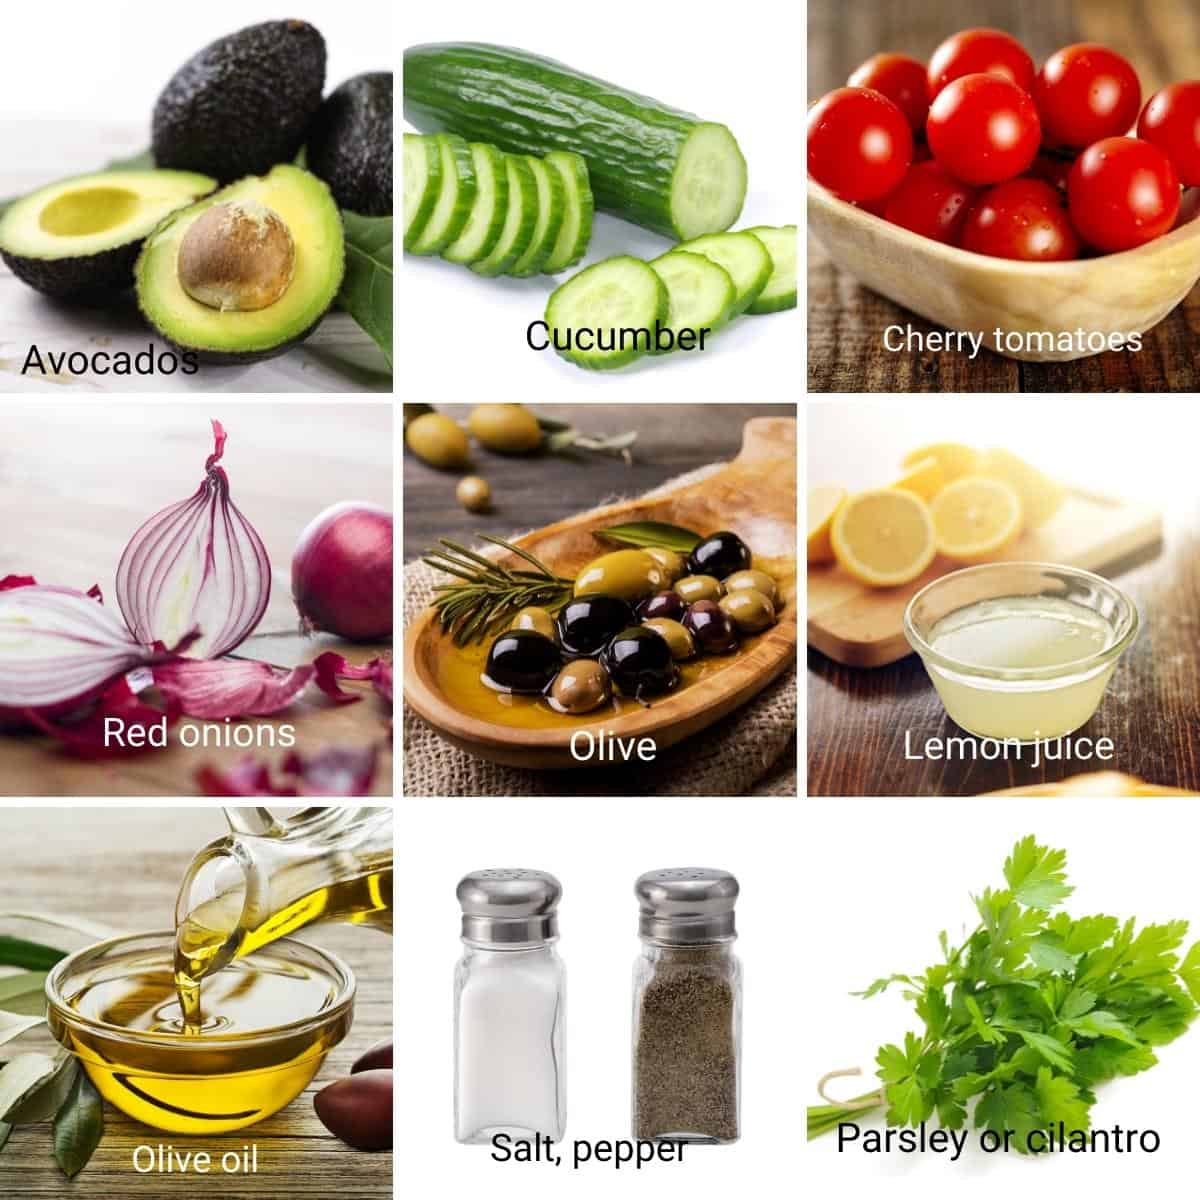 Ingredients for making avocado salad.